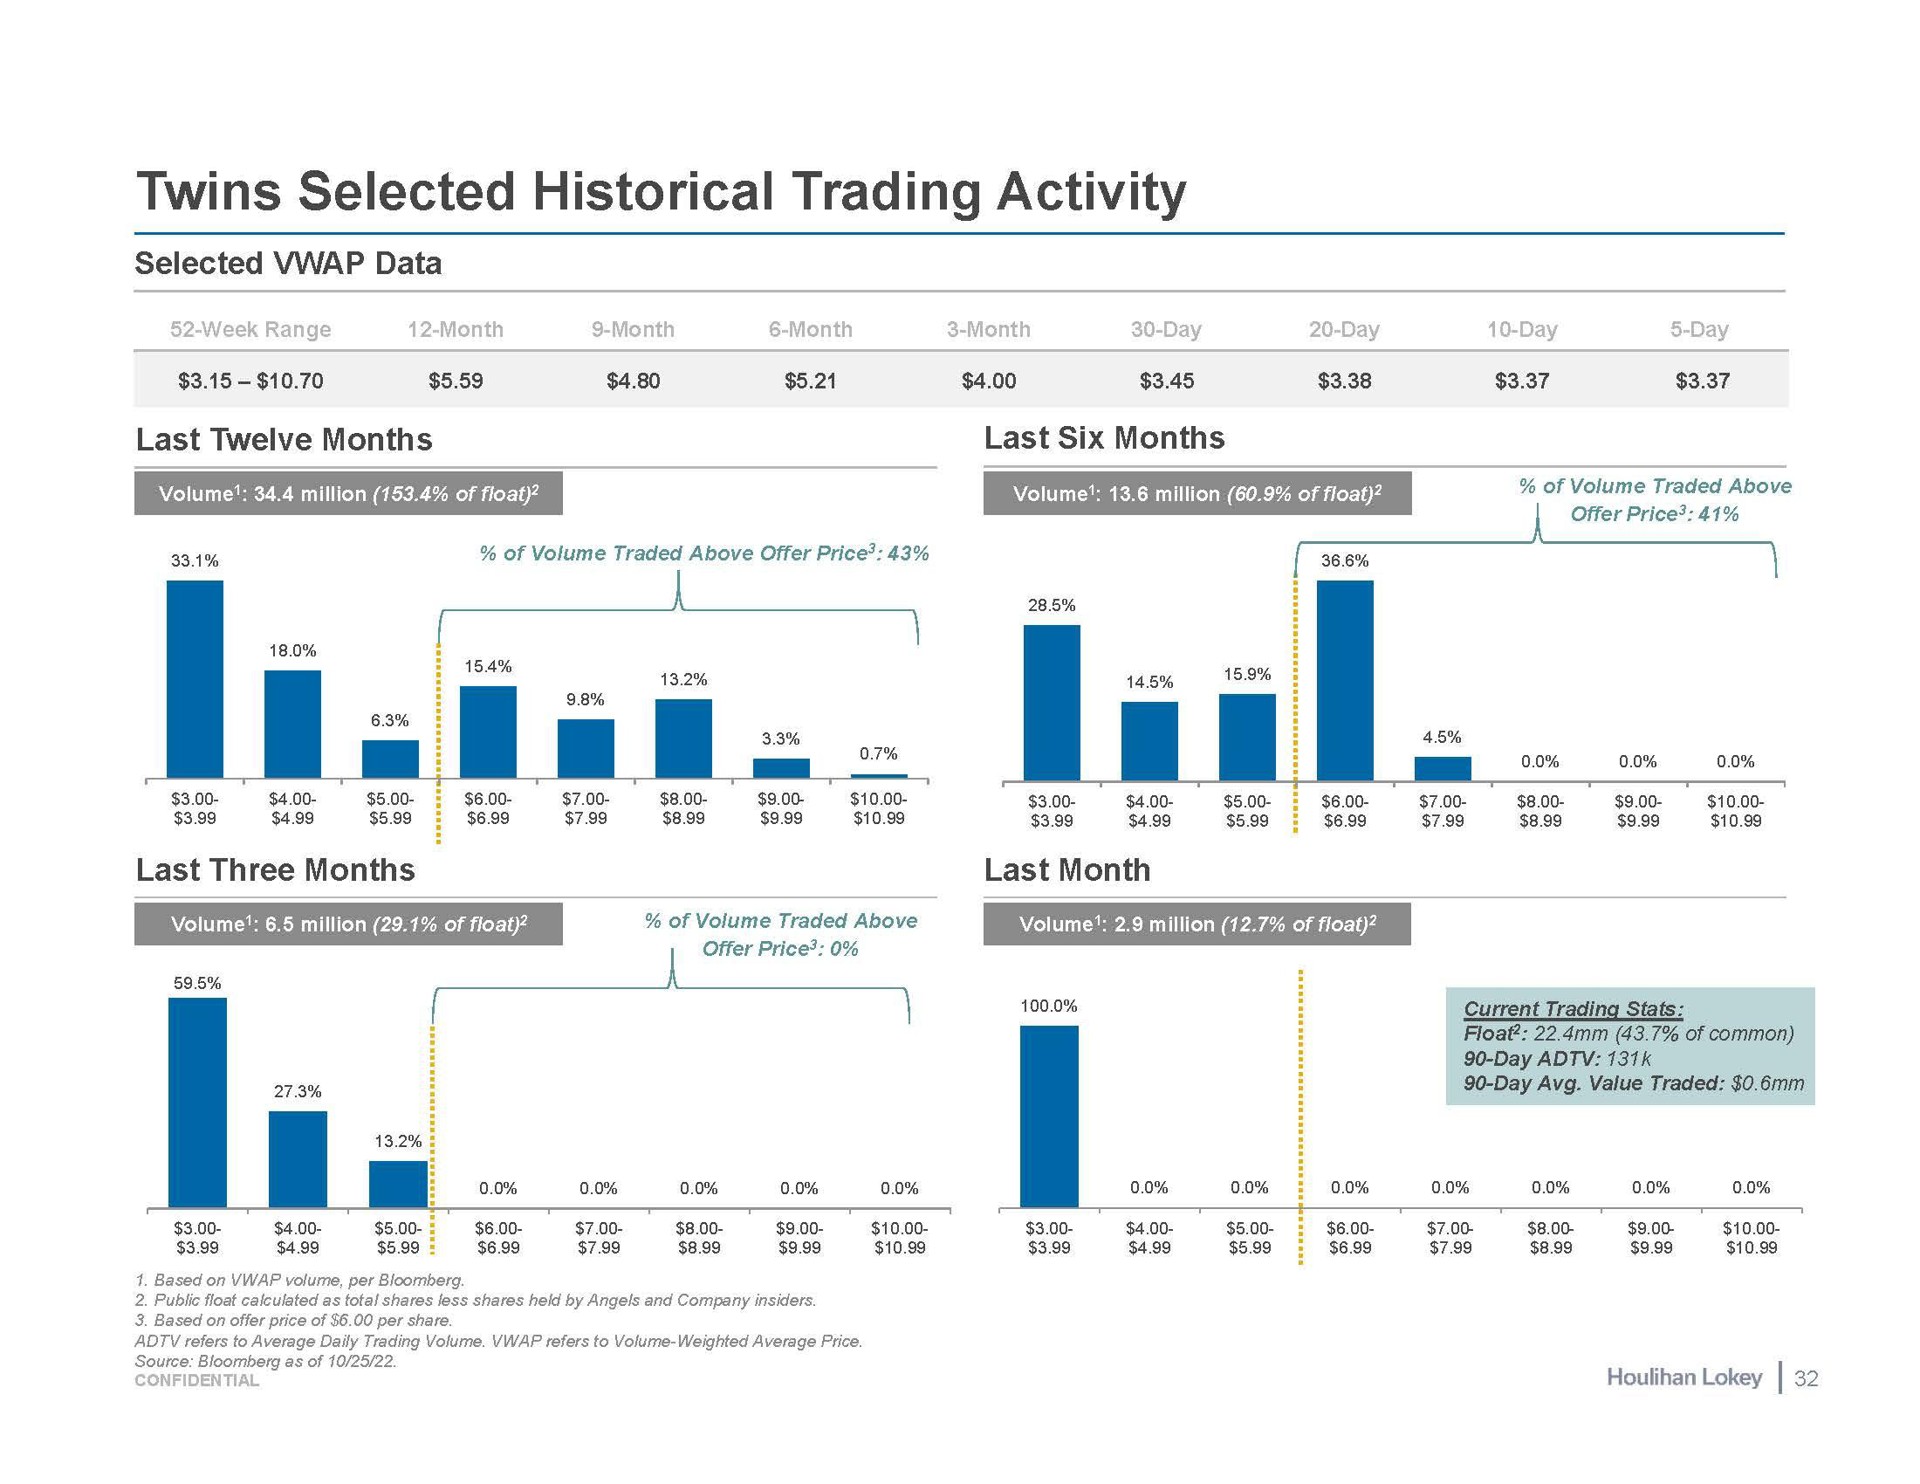 twins selected historical trading activity selected data | Houlihan Lokey